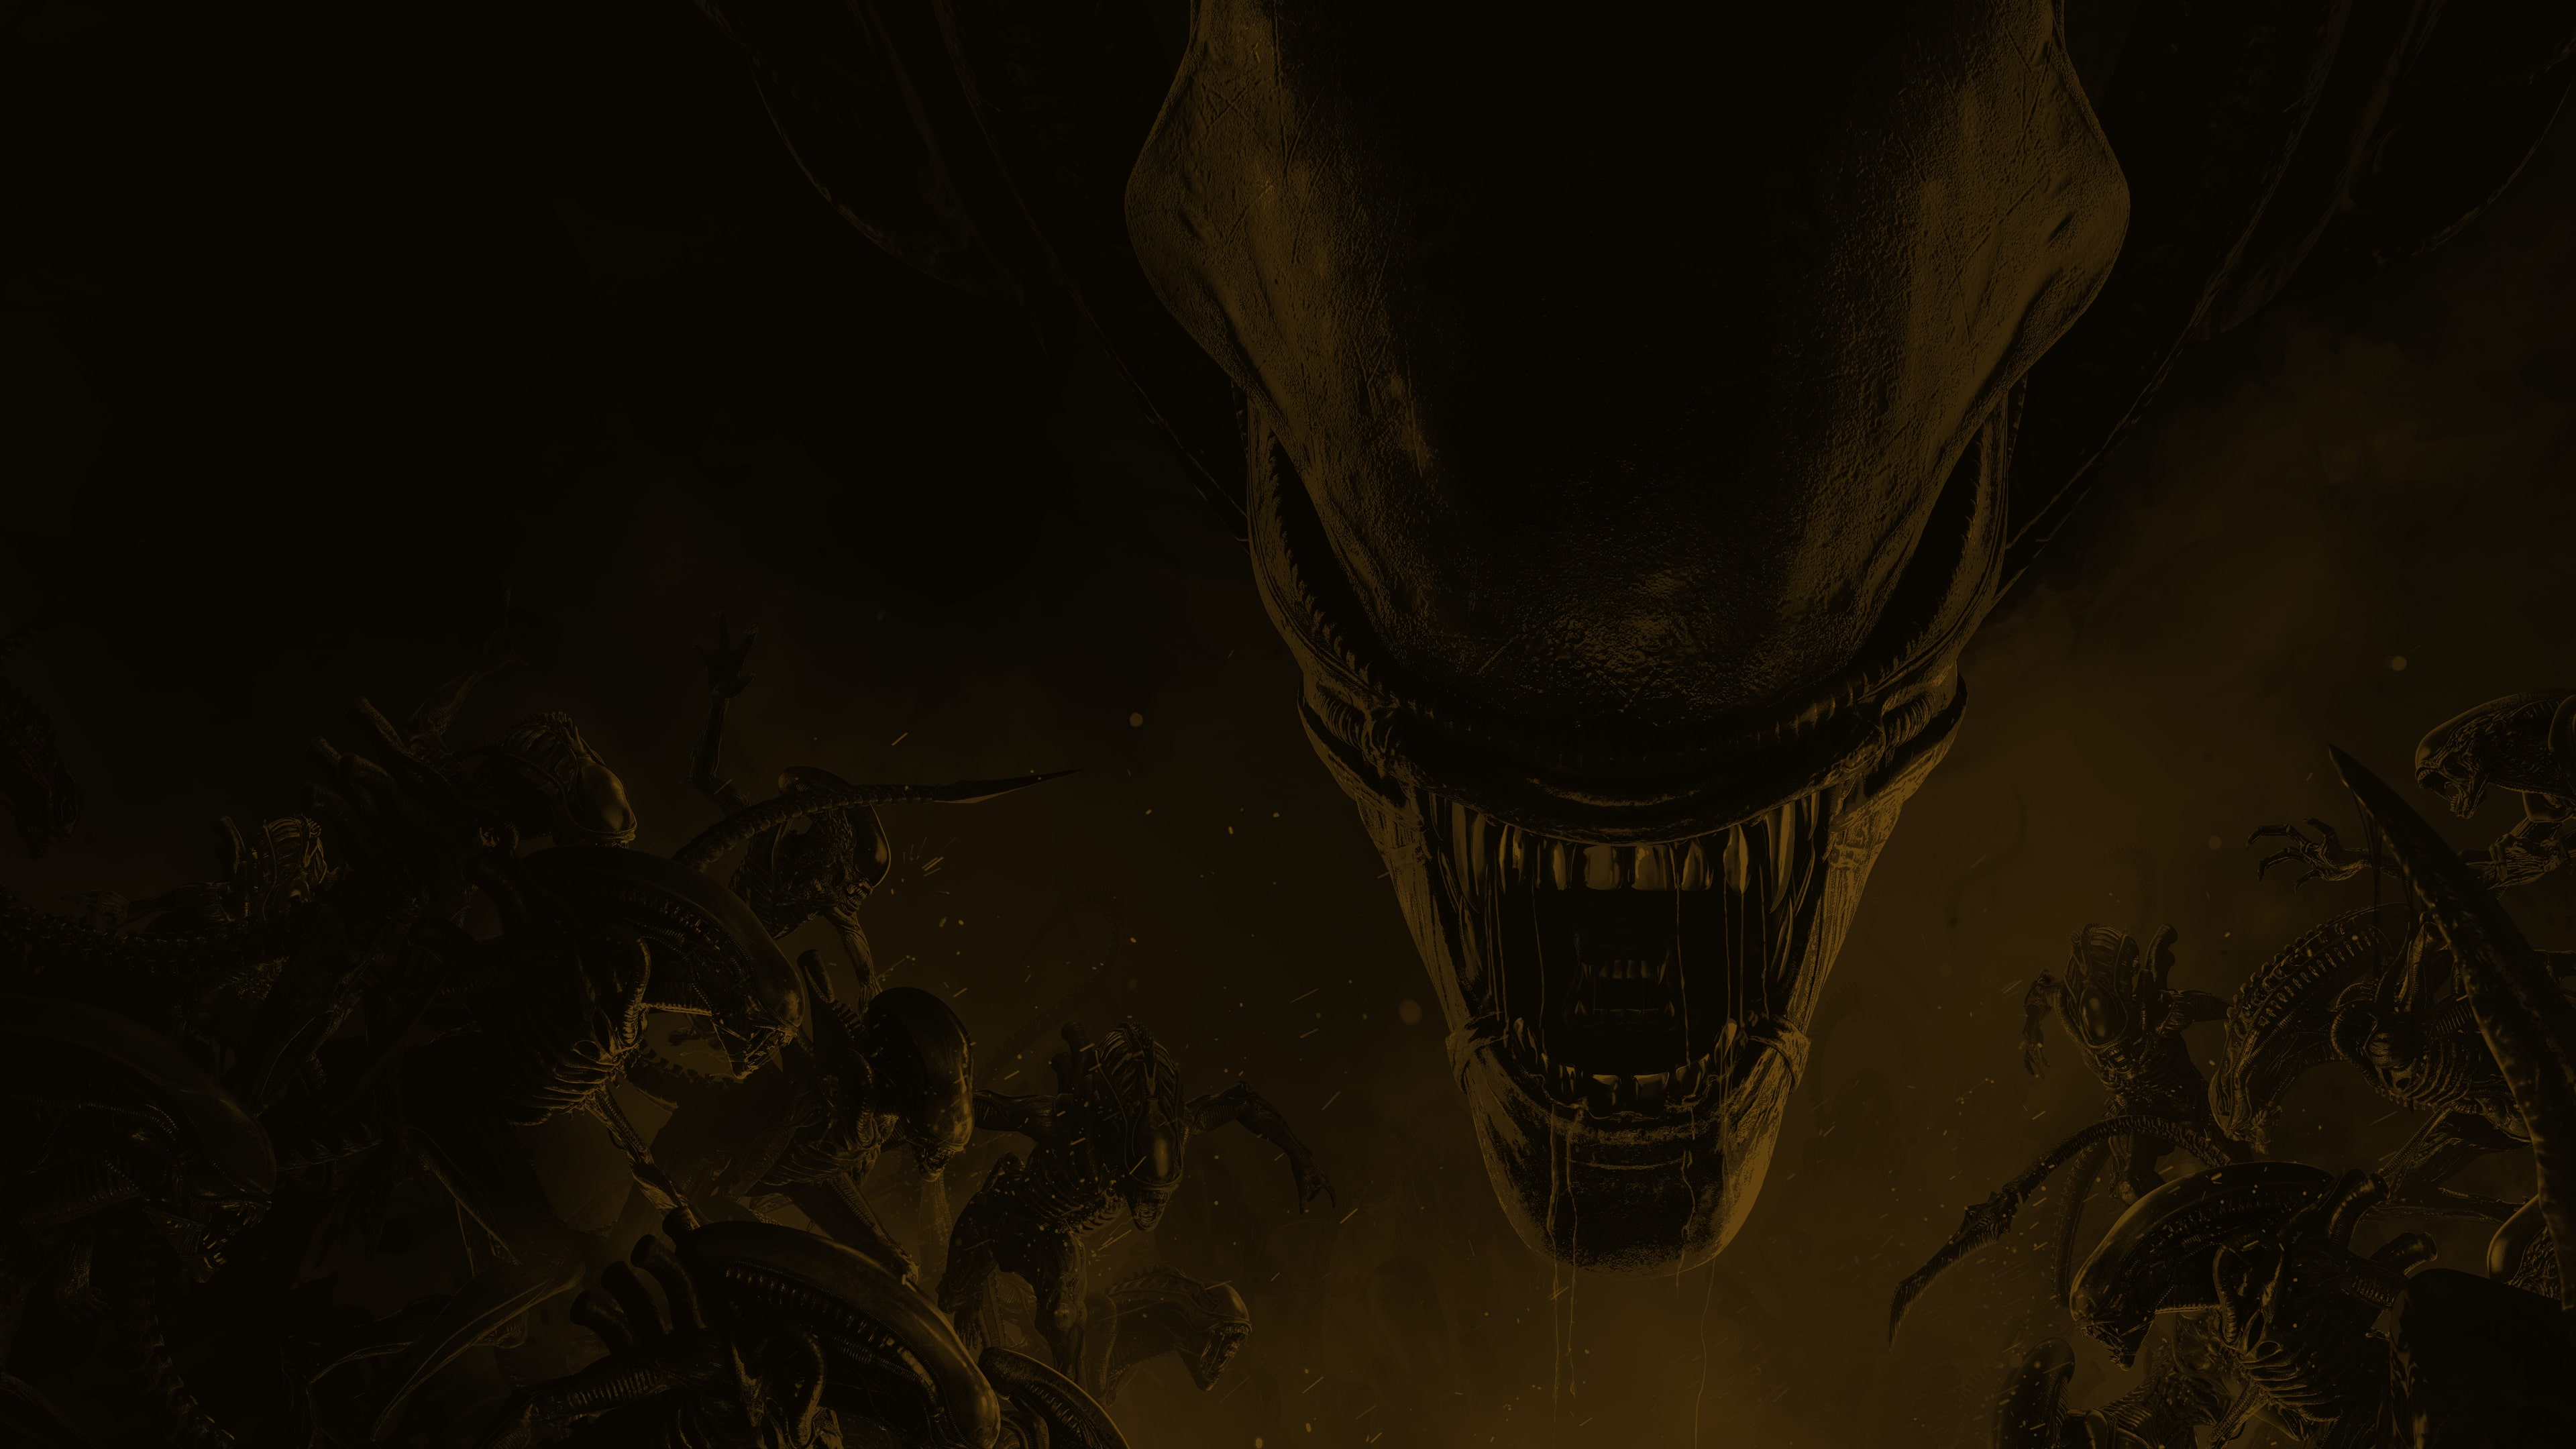 Aliens: Fireteam Elite - Deluxe Edition Upgrade